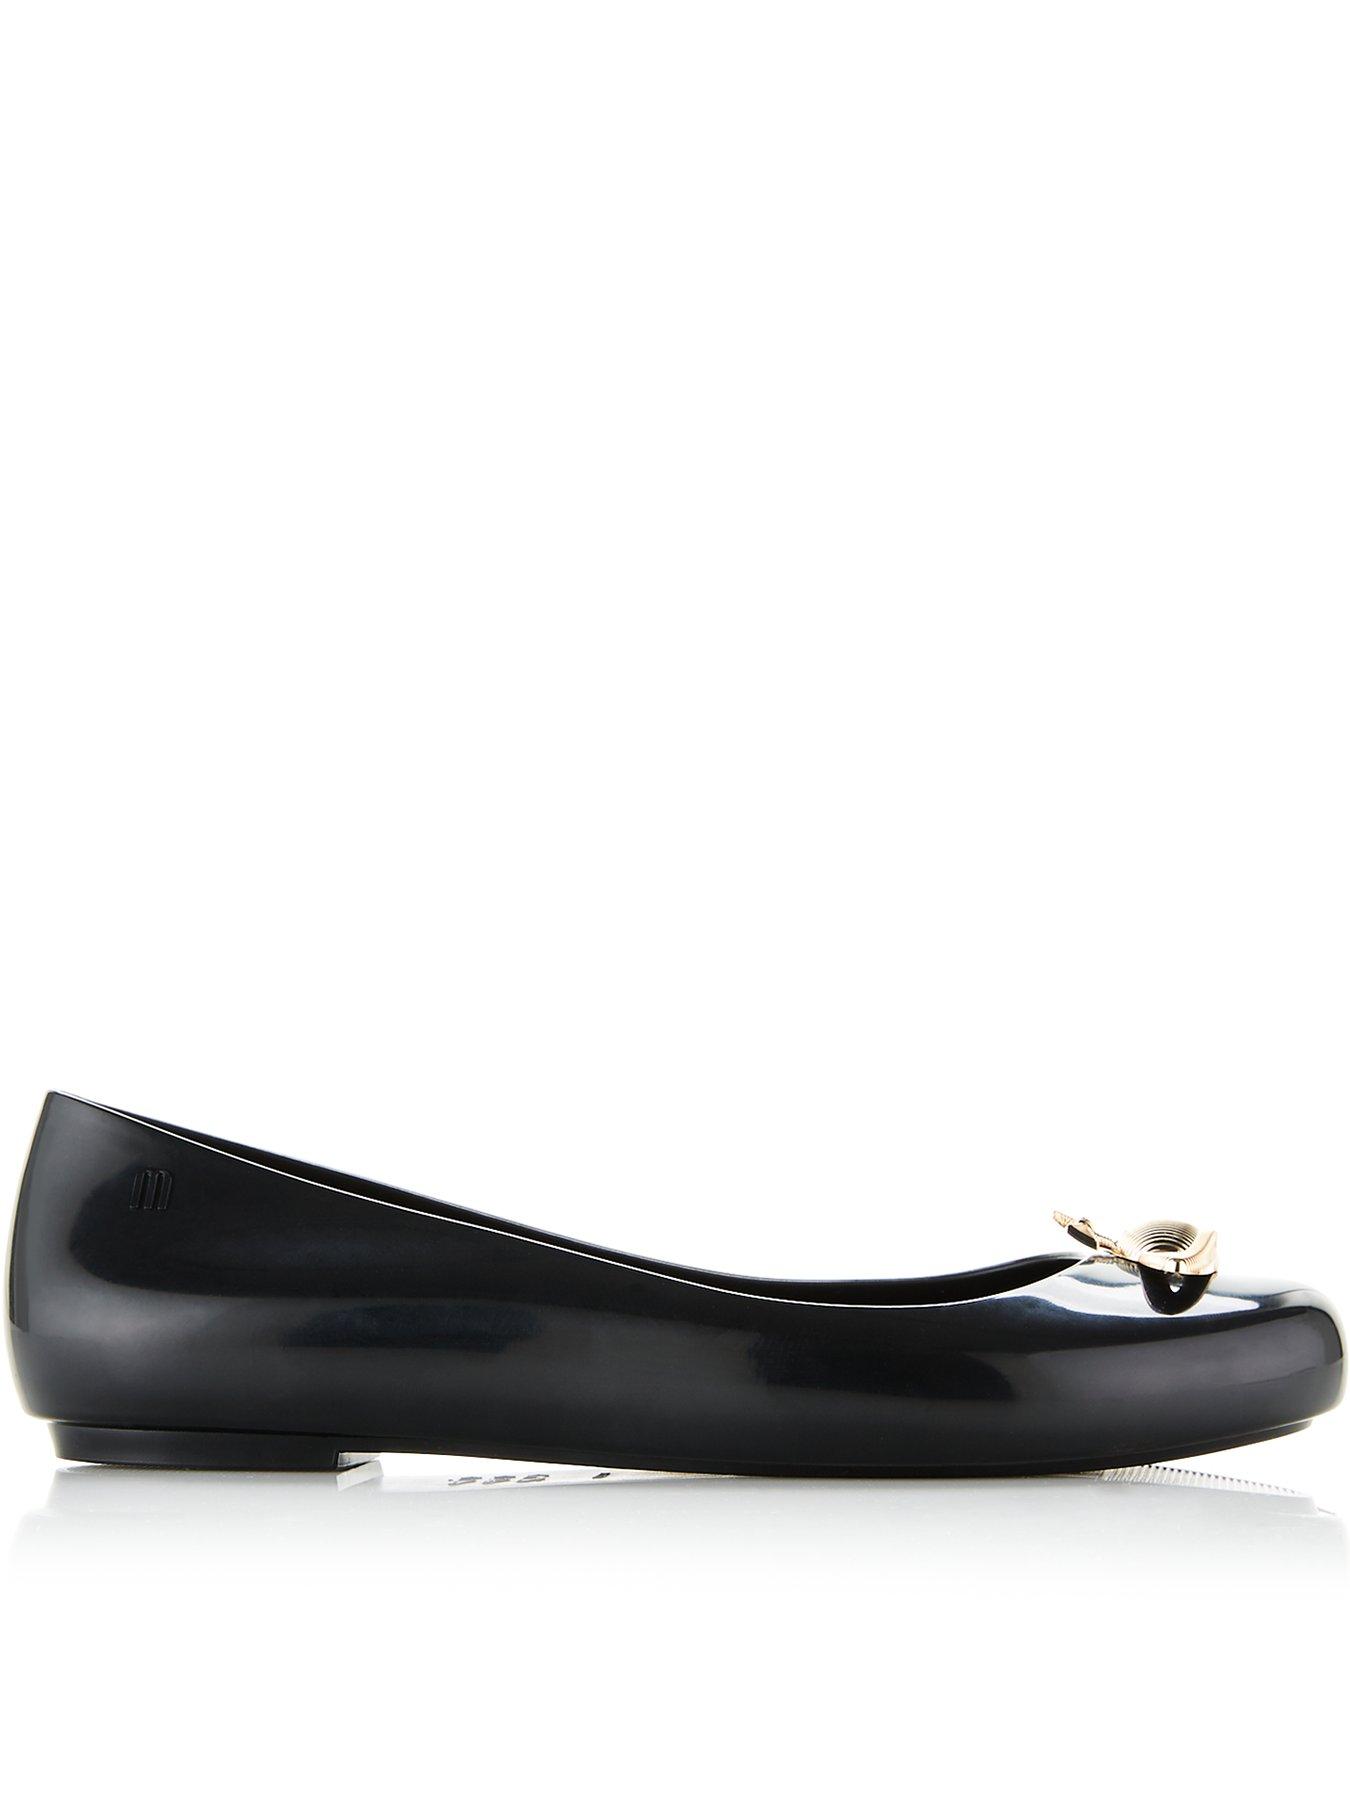 Vivienne Westwood For Melissa Black Space Orb Flat Shoes